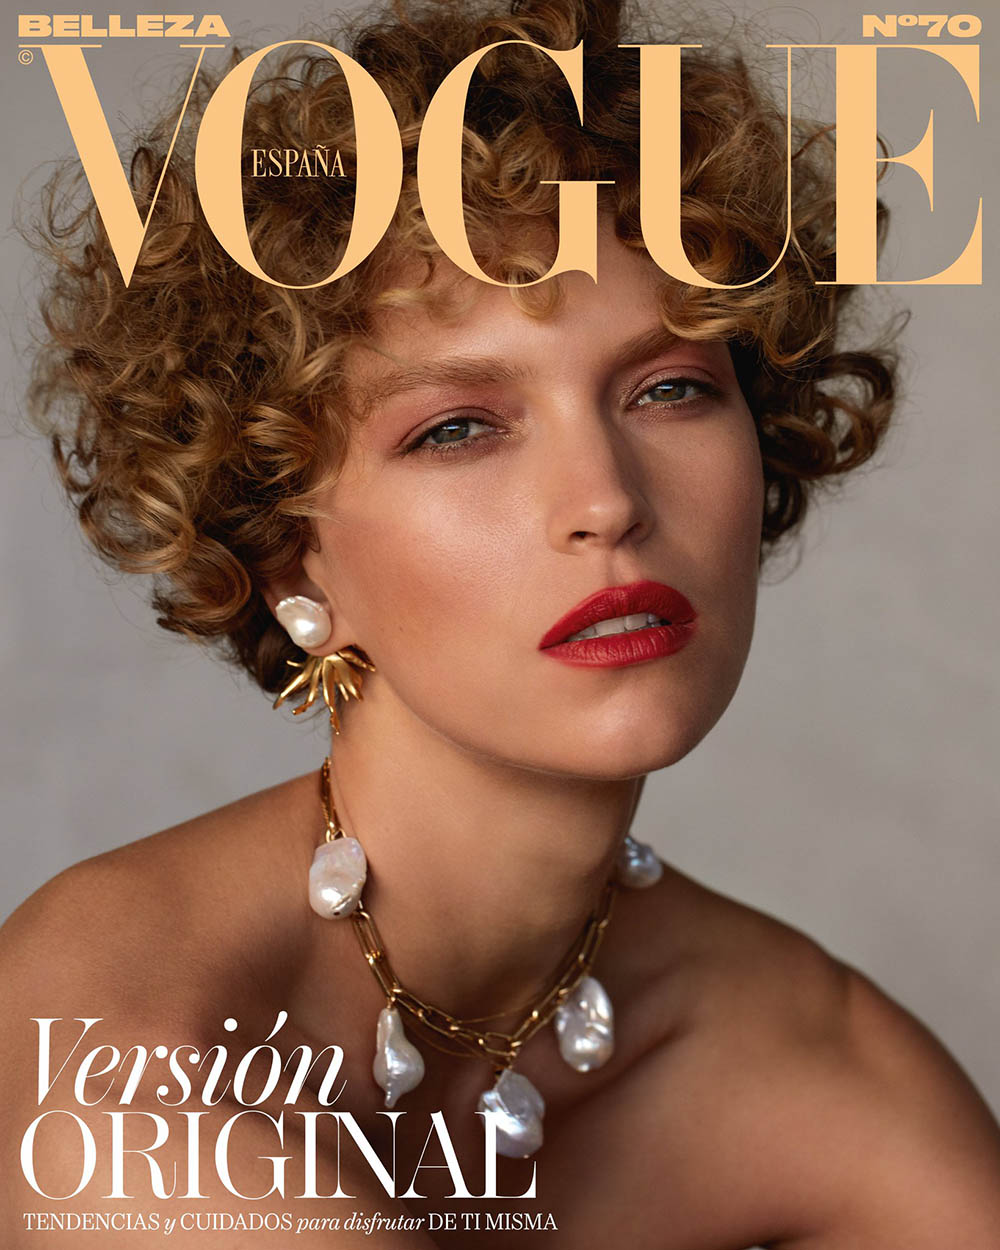 Arizona Muse covers Vogue Belleza Spain April 2020 by Camilla Akrans